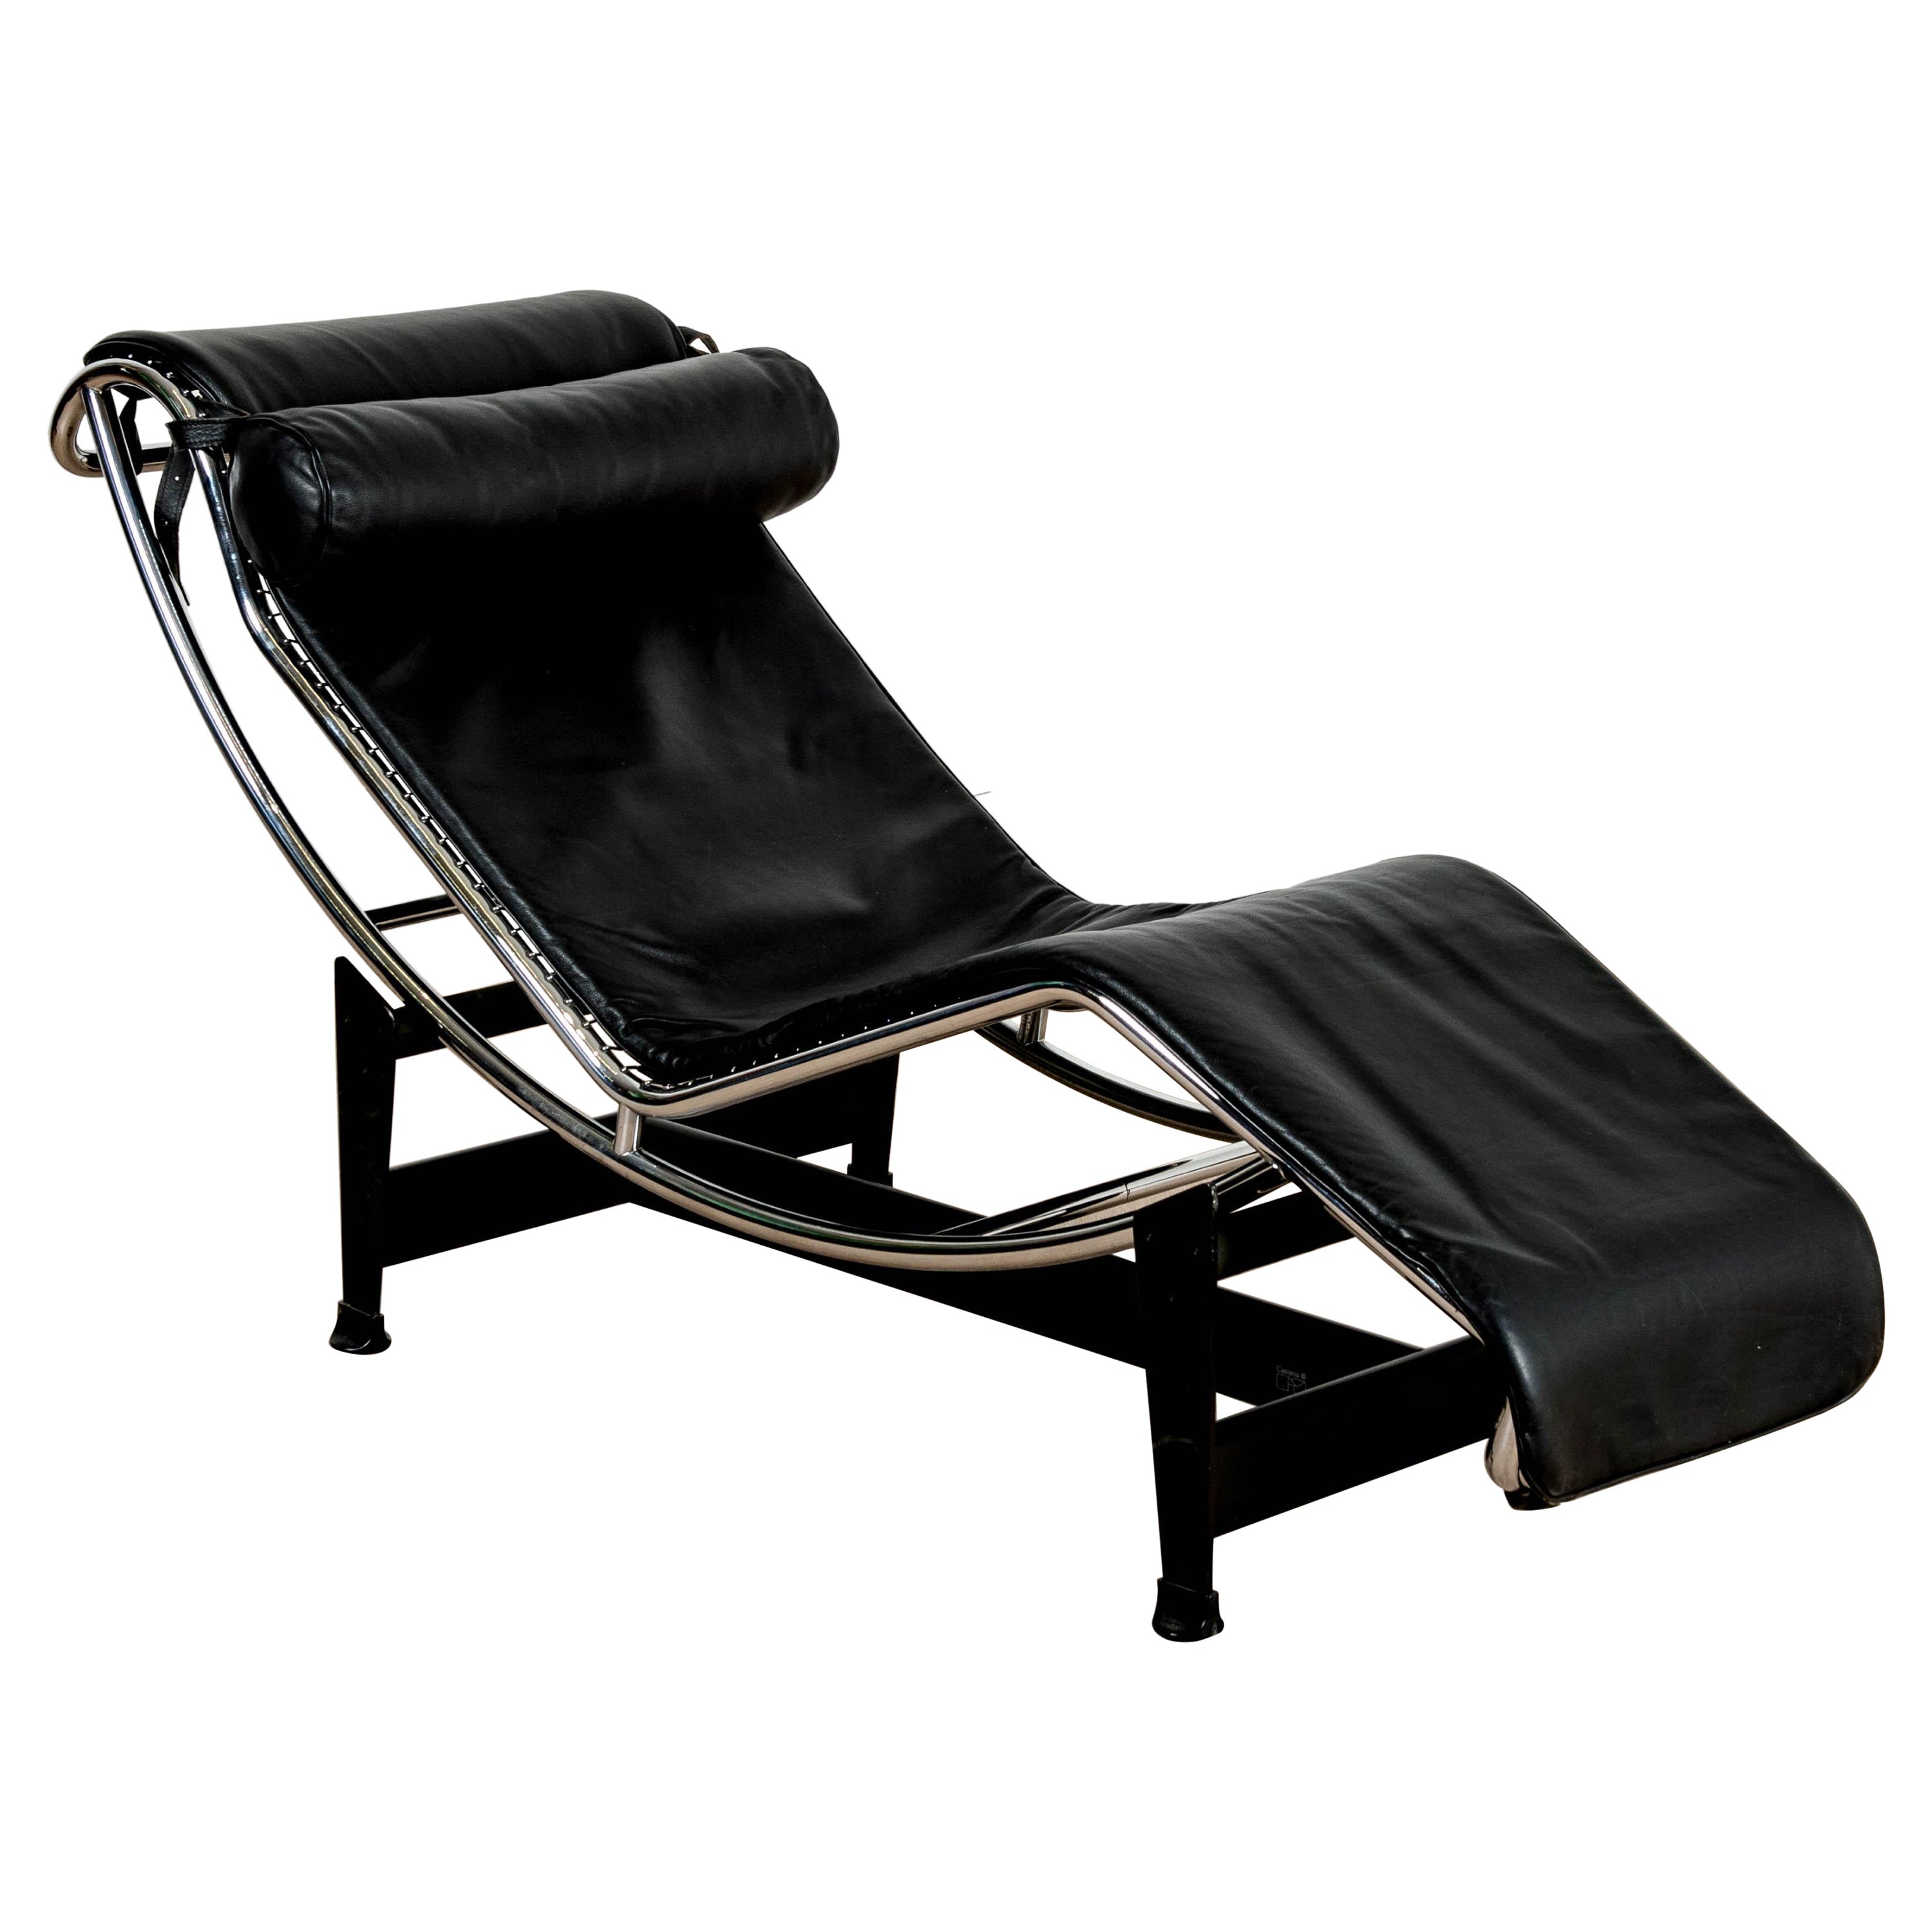 Chaise longue "LC4", Le Corbusier, Pierre Jeanneret, Charlotte Perriand, éditons For Sale